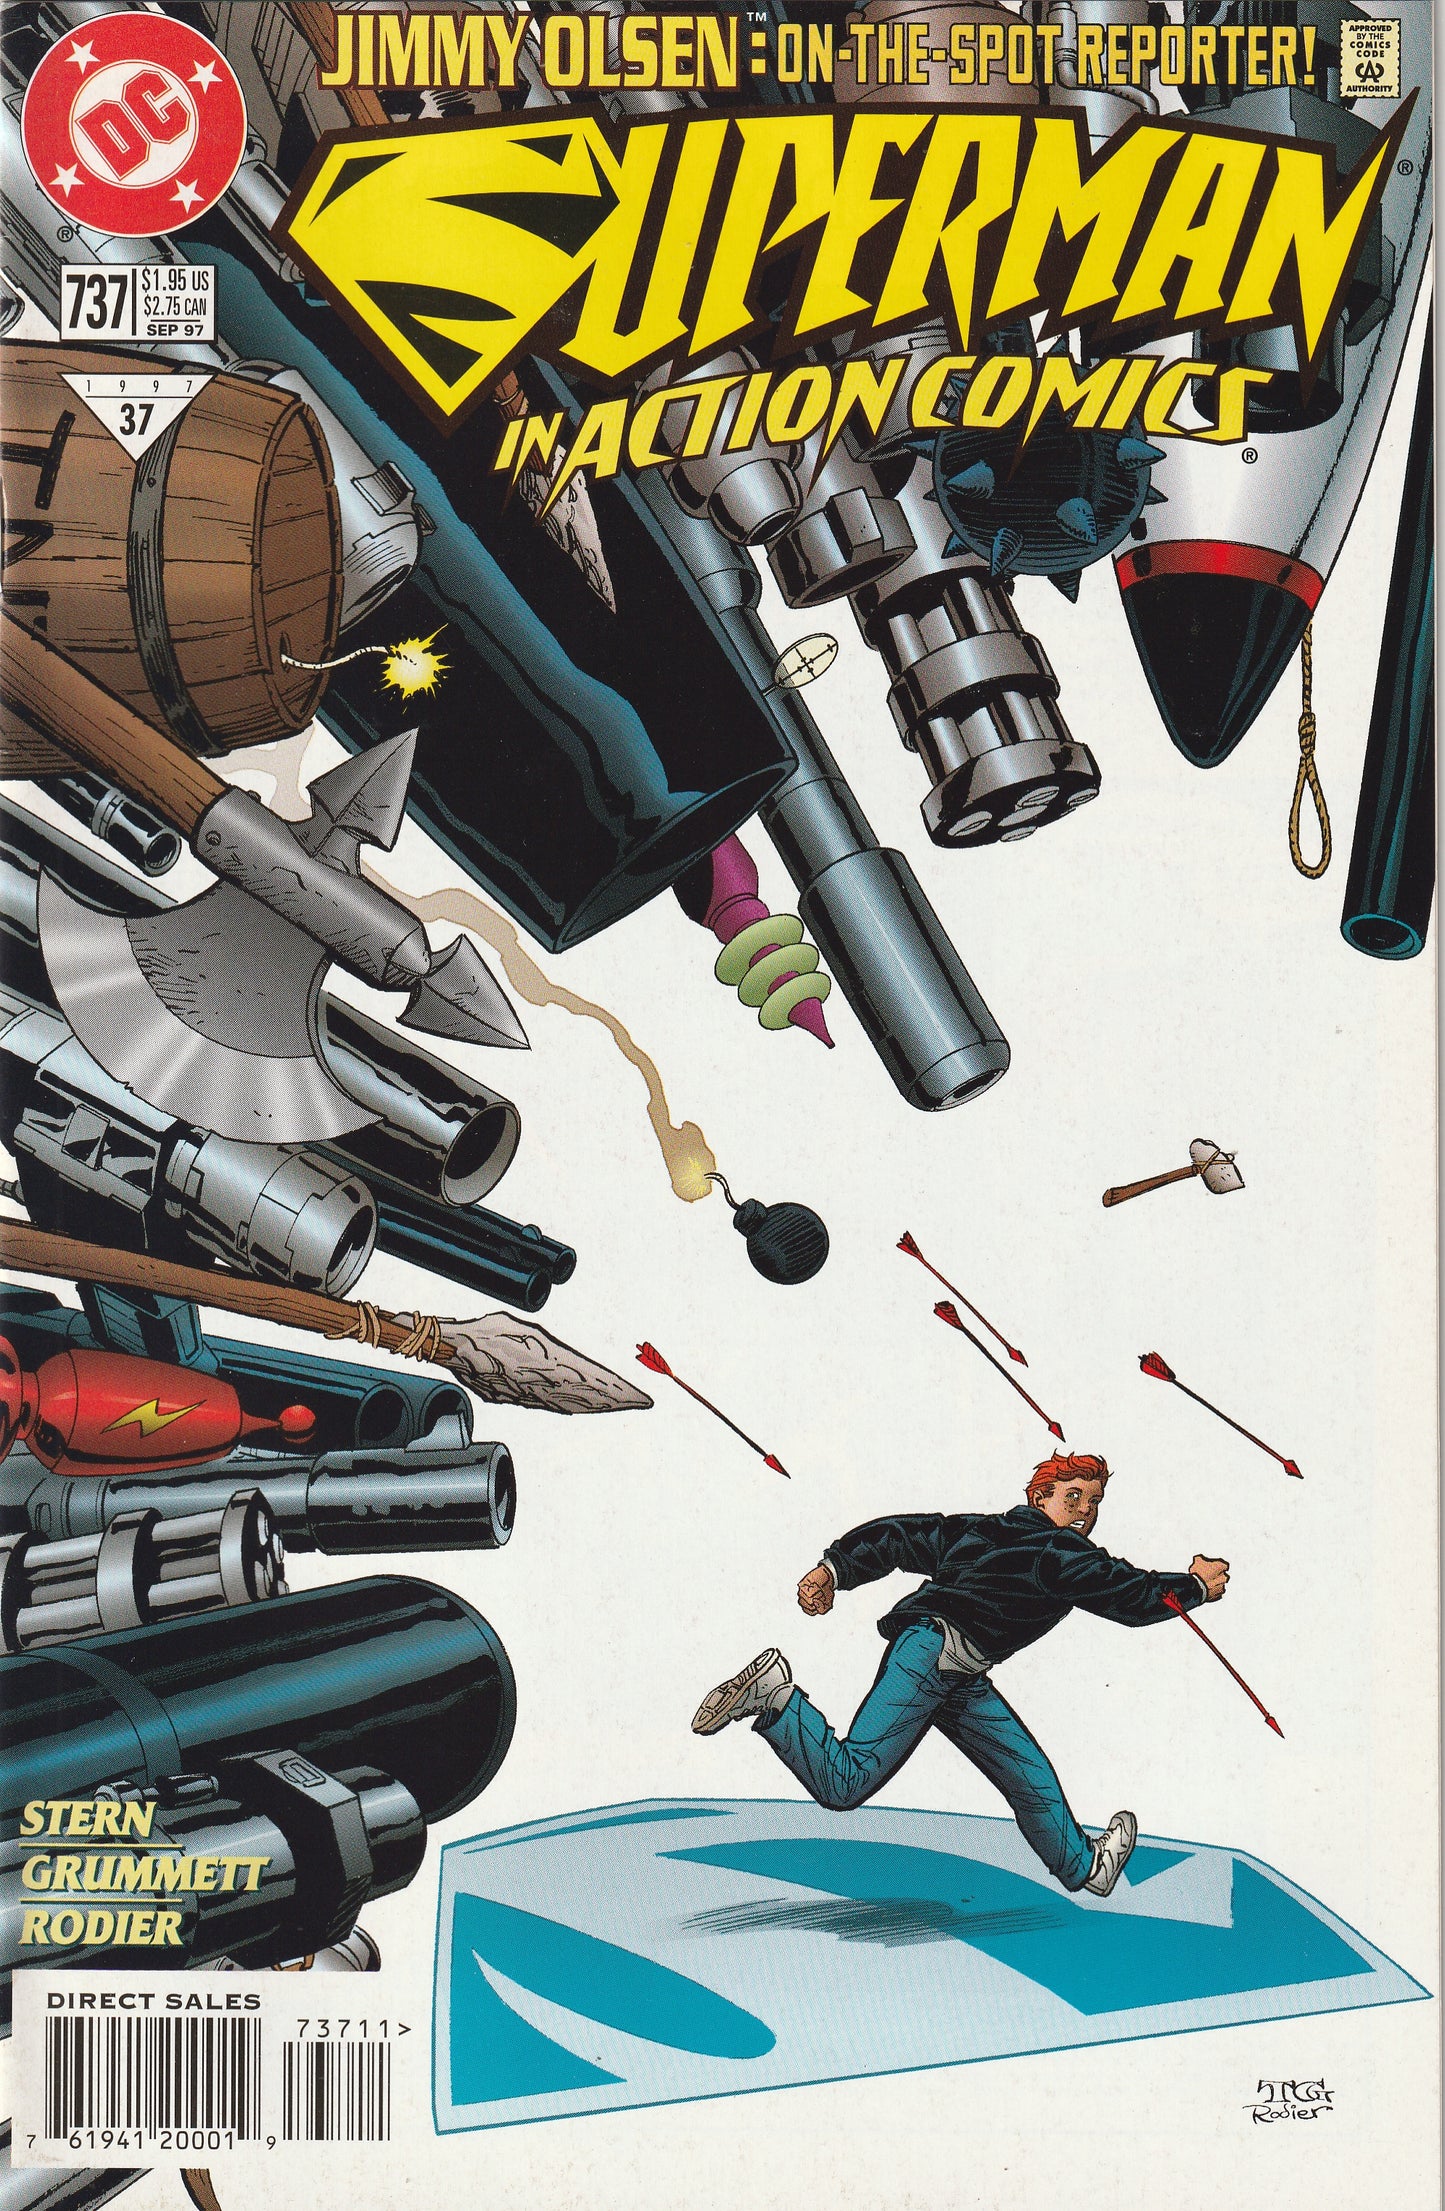 Action Comics #737 (1997)